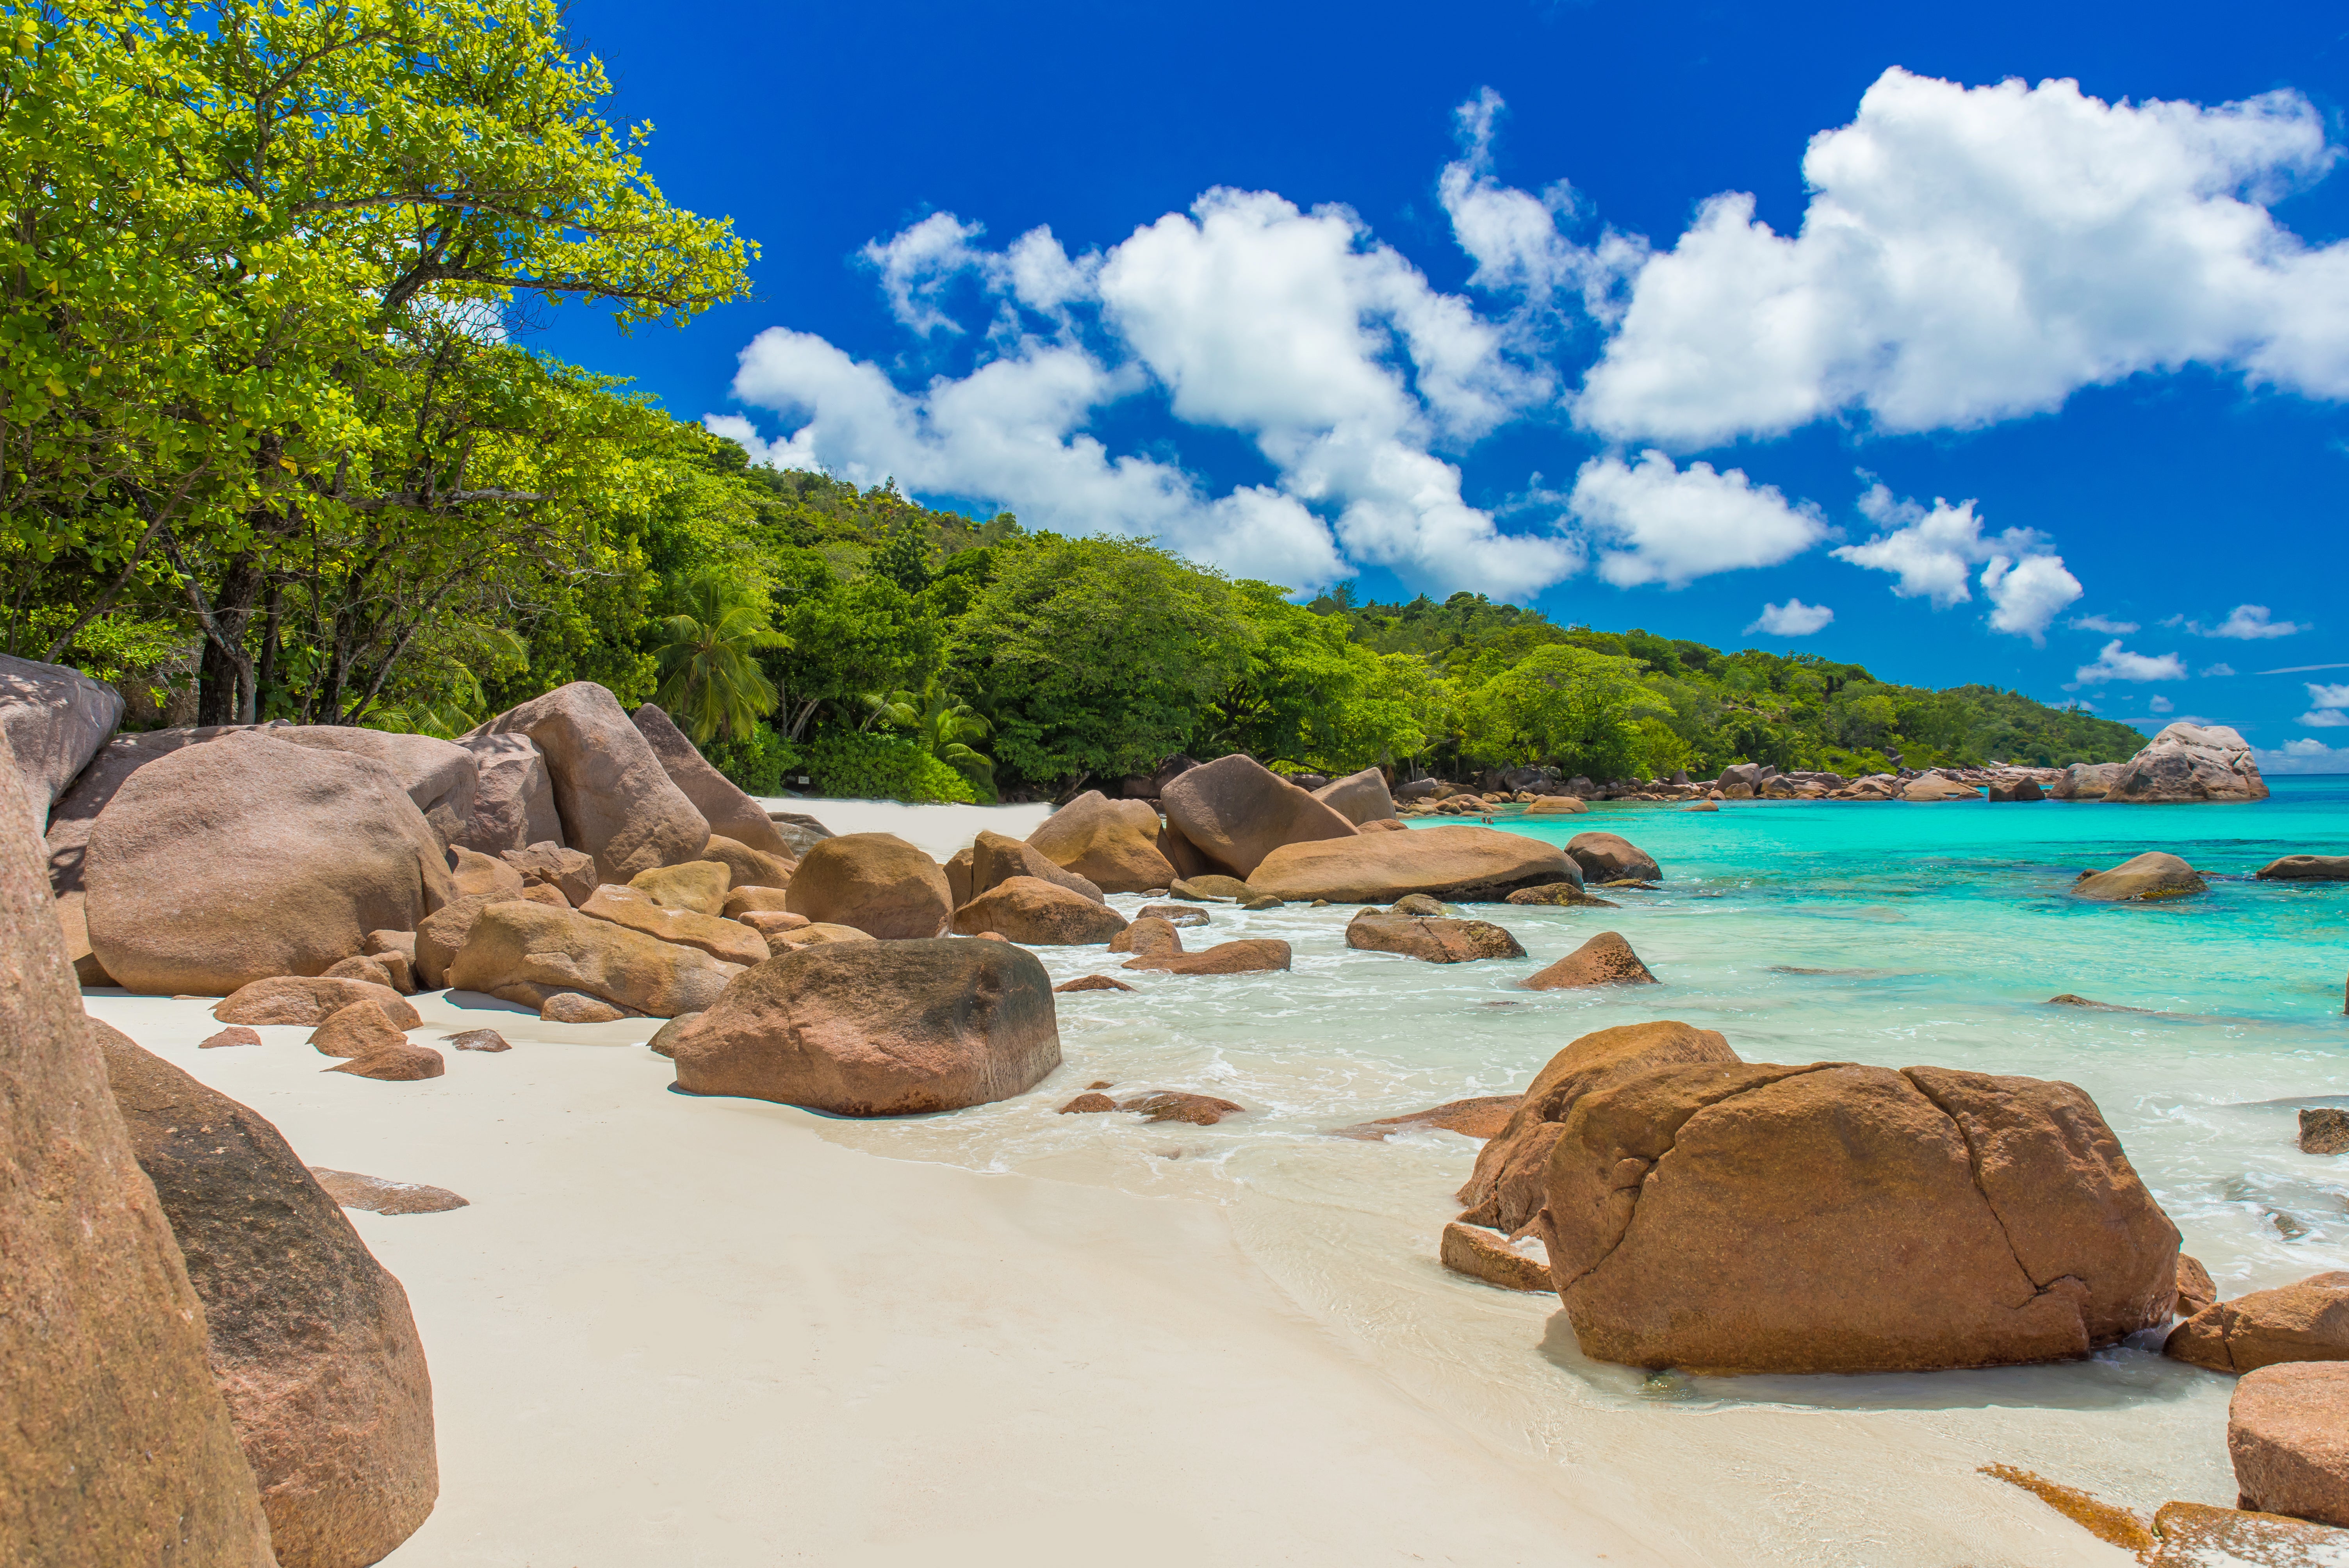 Find paradise on Anse Lazio beach in the Seychelles